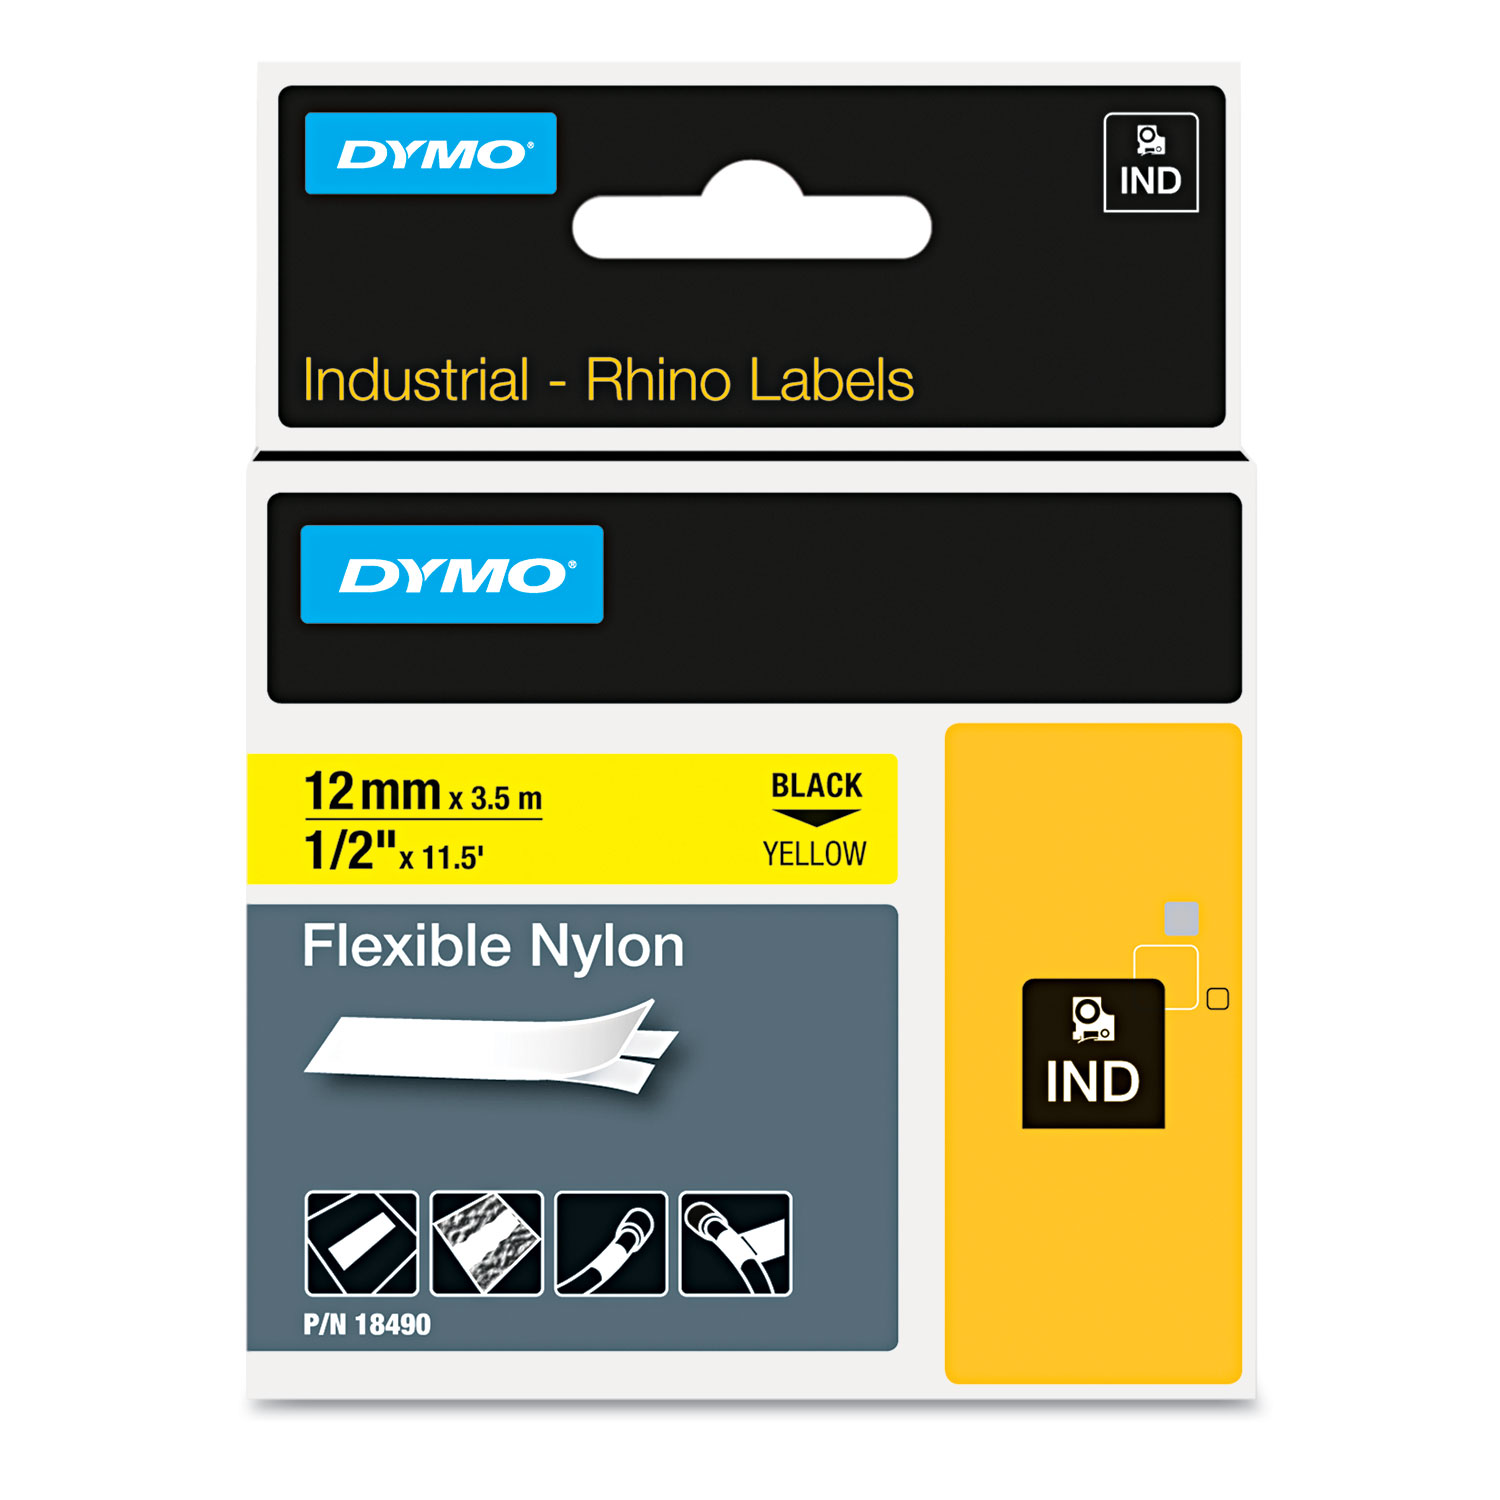  DYMO 18490 Rhino Flexible Nylon Industrial Label Tape, 0.5 x 11.5 ft, Yellow/Black Print (DYM18490) 